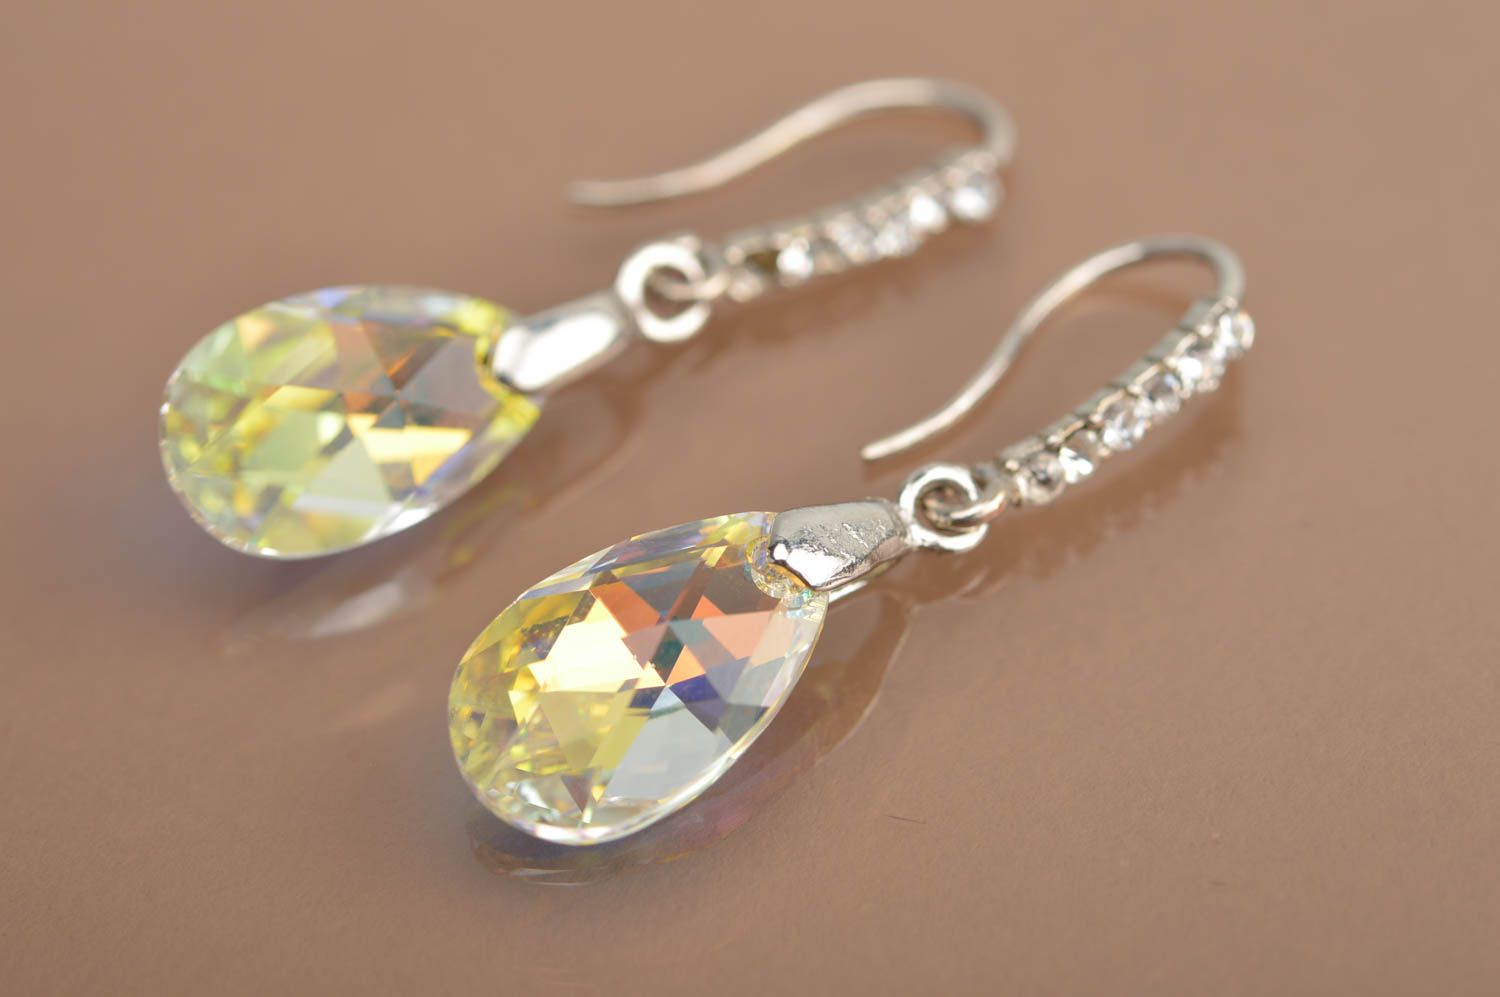 Handmade jewelry Austrian crystals earrings  teardrop - shaped accessories photo 2